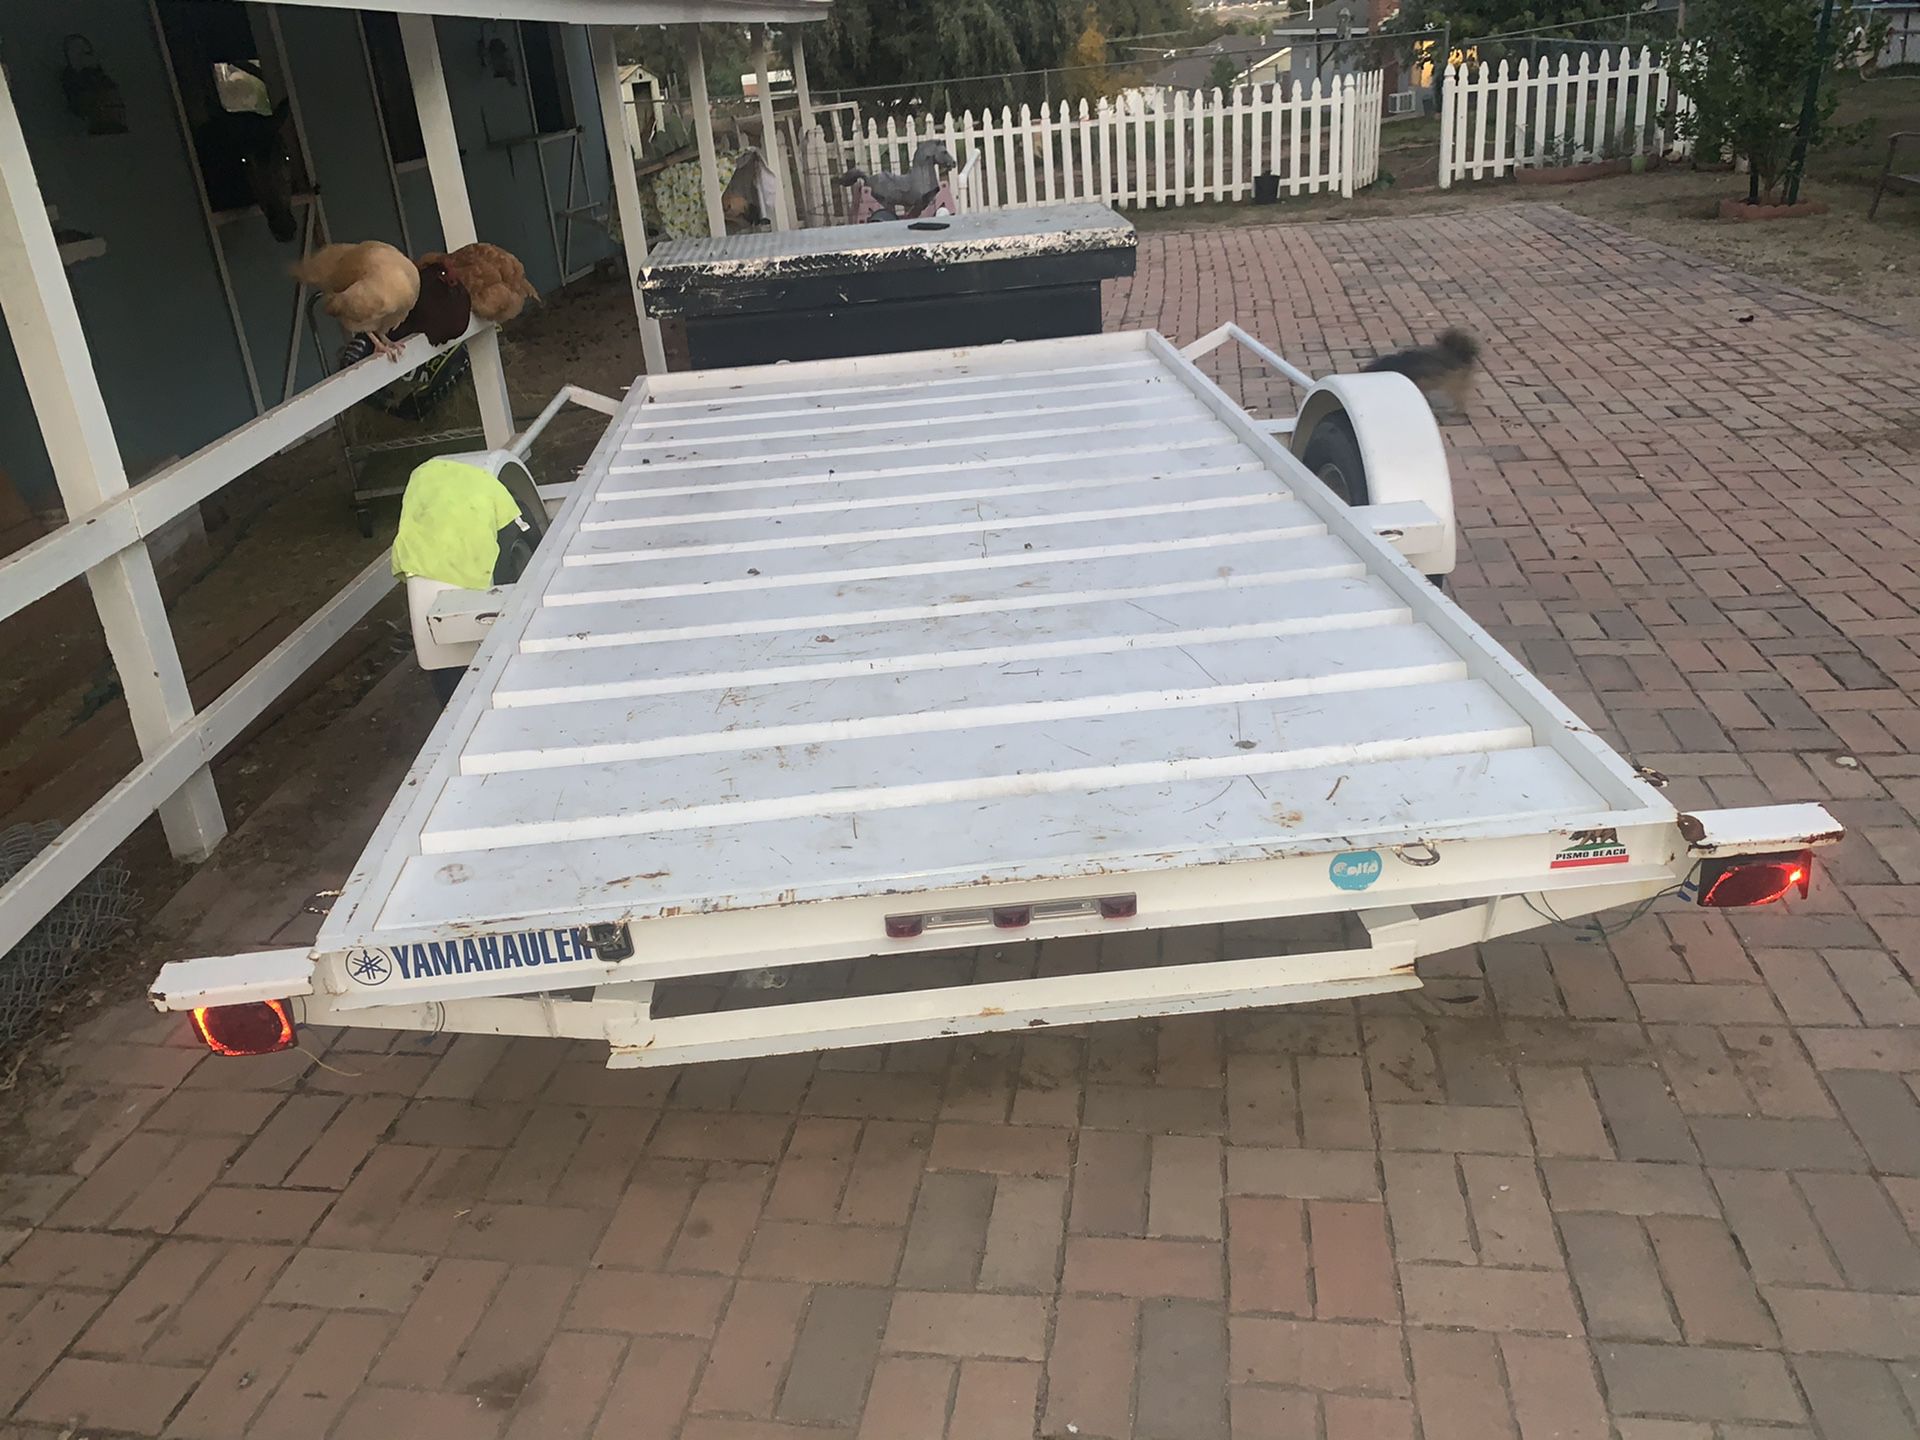 Flatbed trailer 6x12 $1500